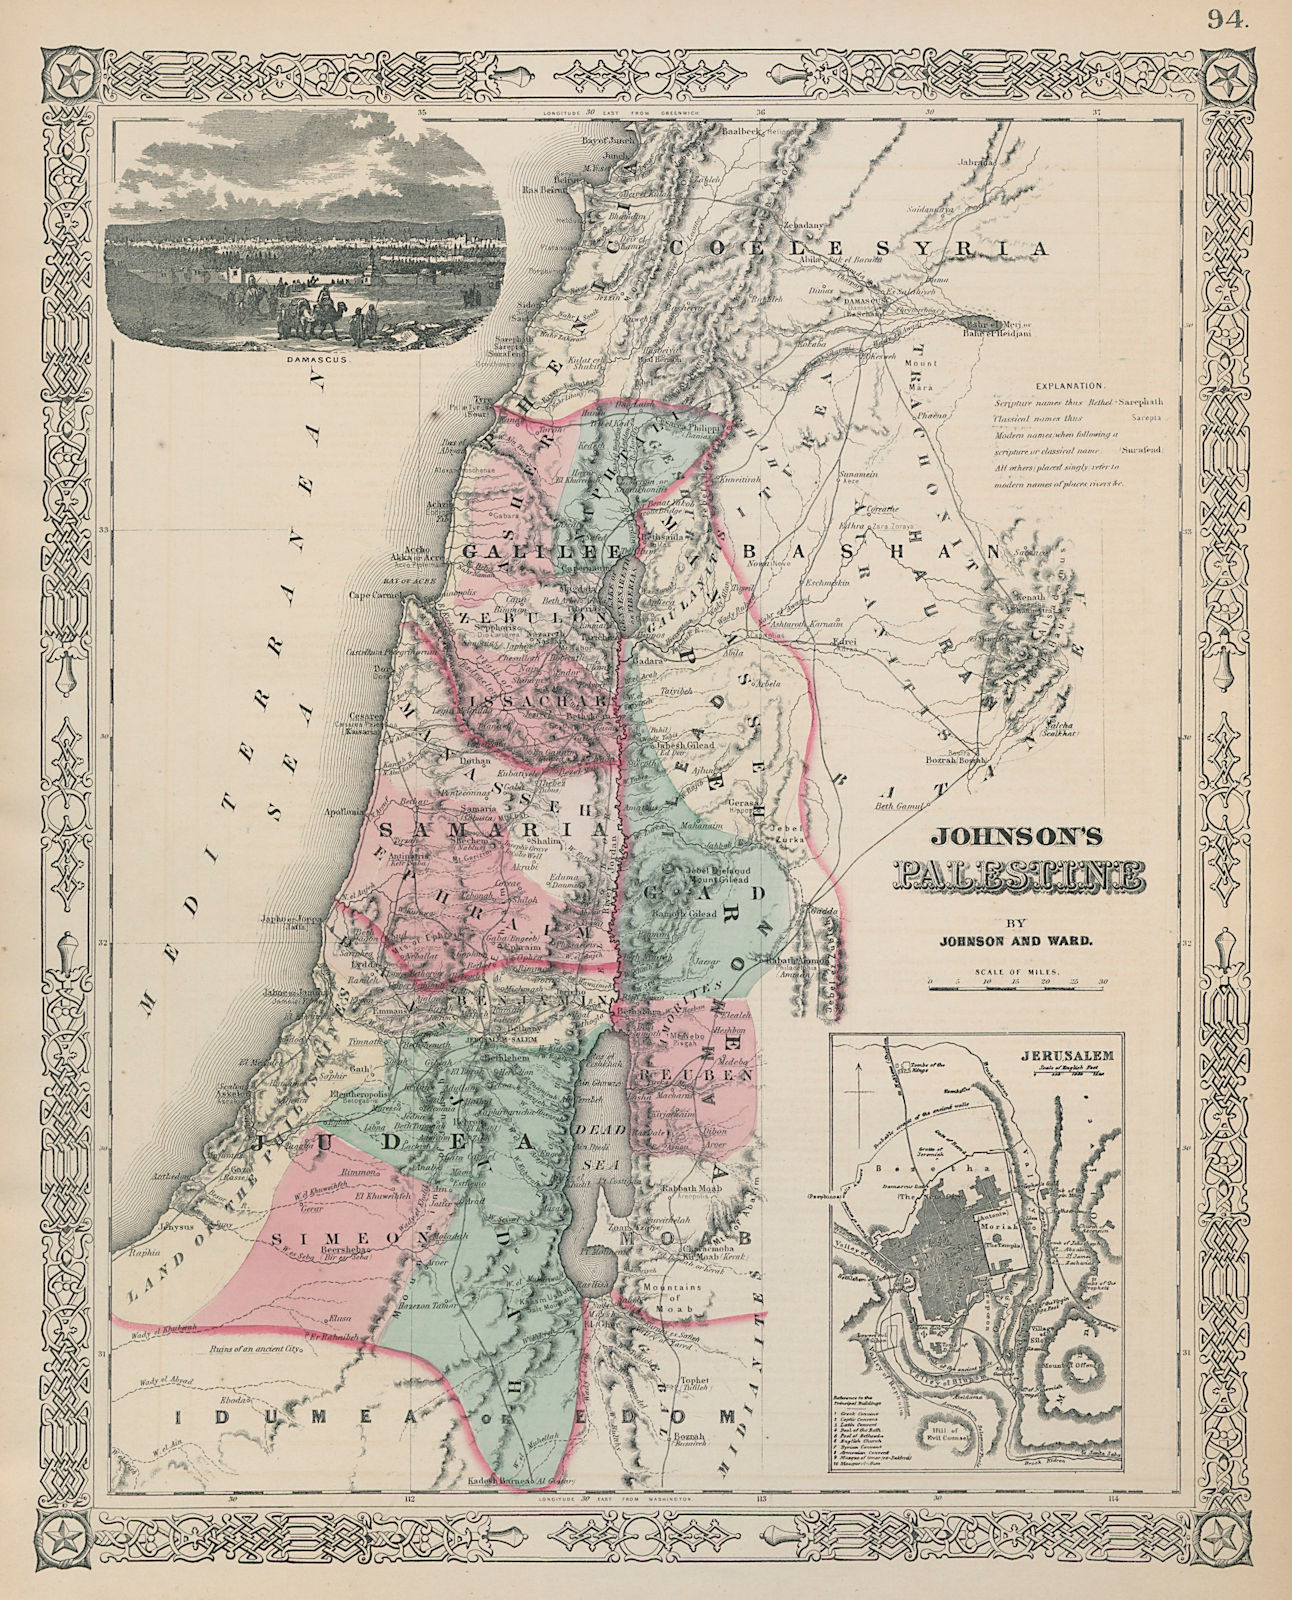 Johnson's Palestine. Jerusalem Damascus. 12 tribes of Israel. Holy Land 1865 map